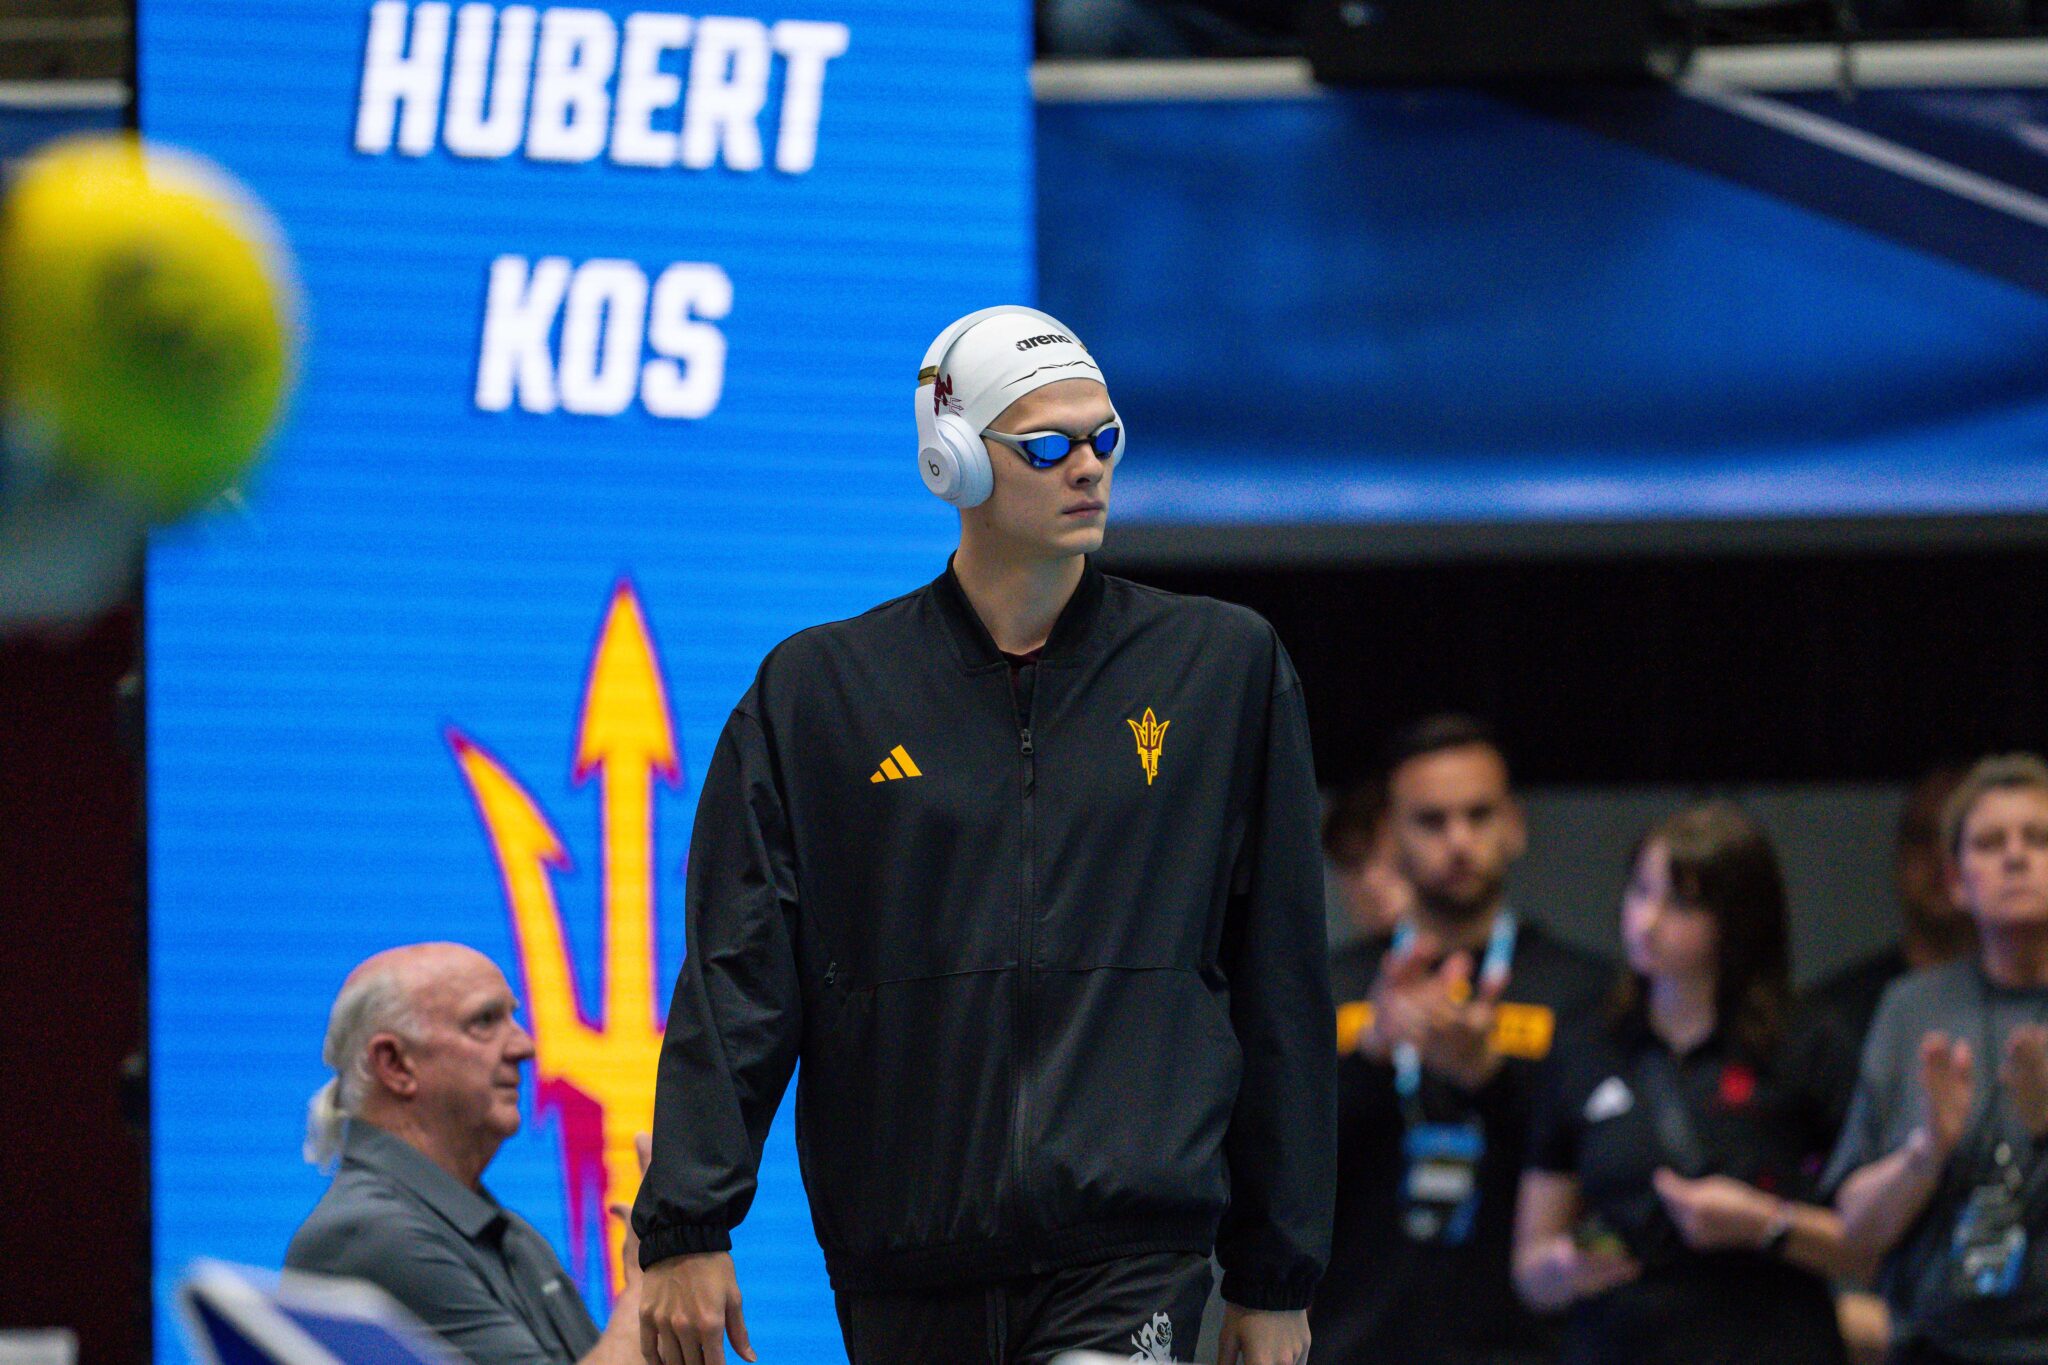 Hubert Kos, World Champion and NCAA Runner-Up, Set to Transfer to Texas